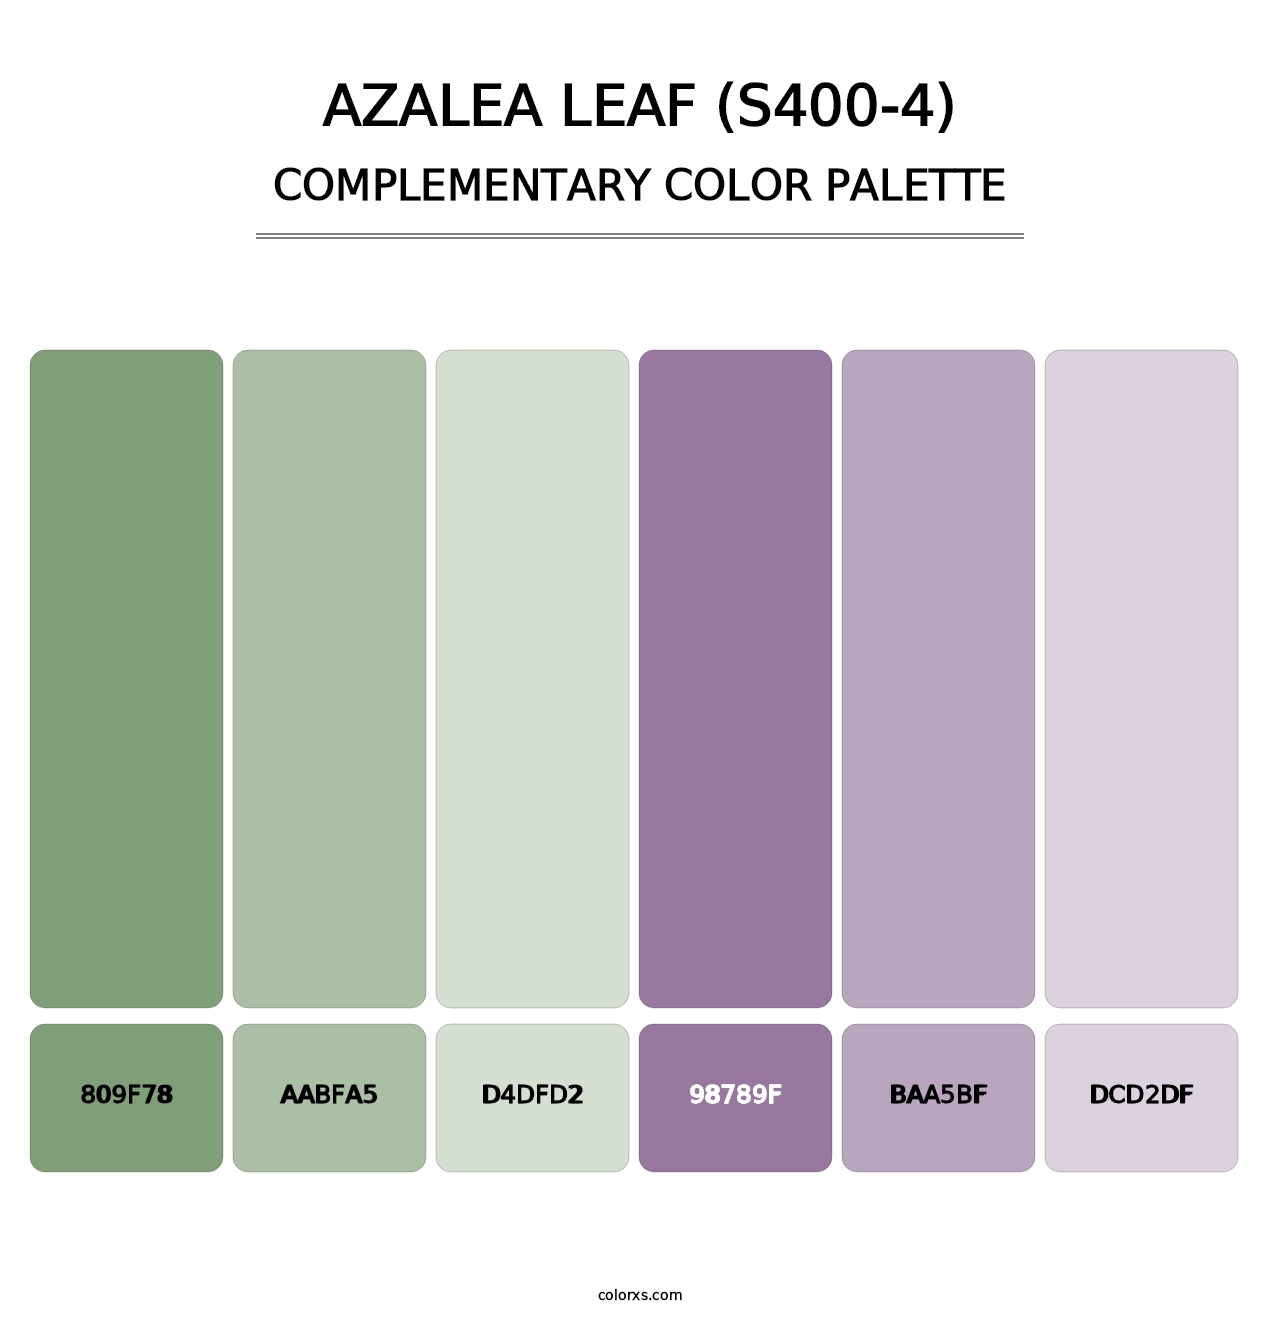 Azalea Leaf (S400-4) - Complementary Color Palette